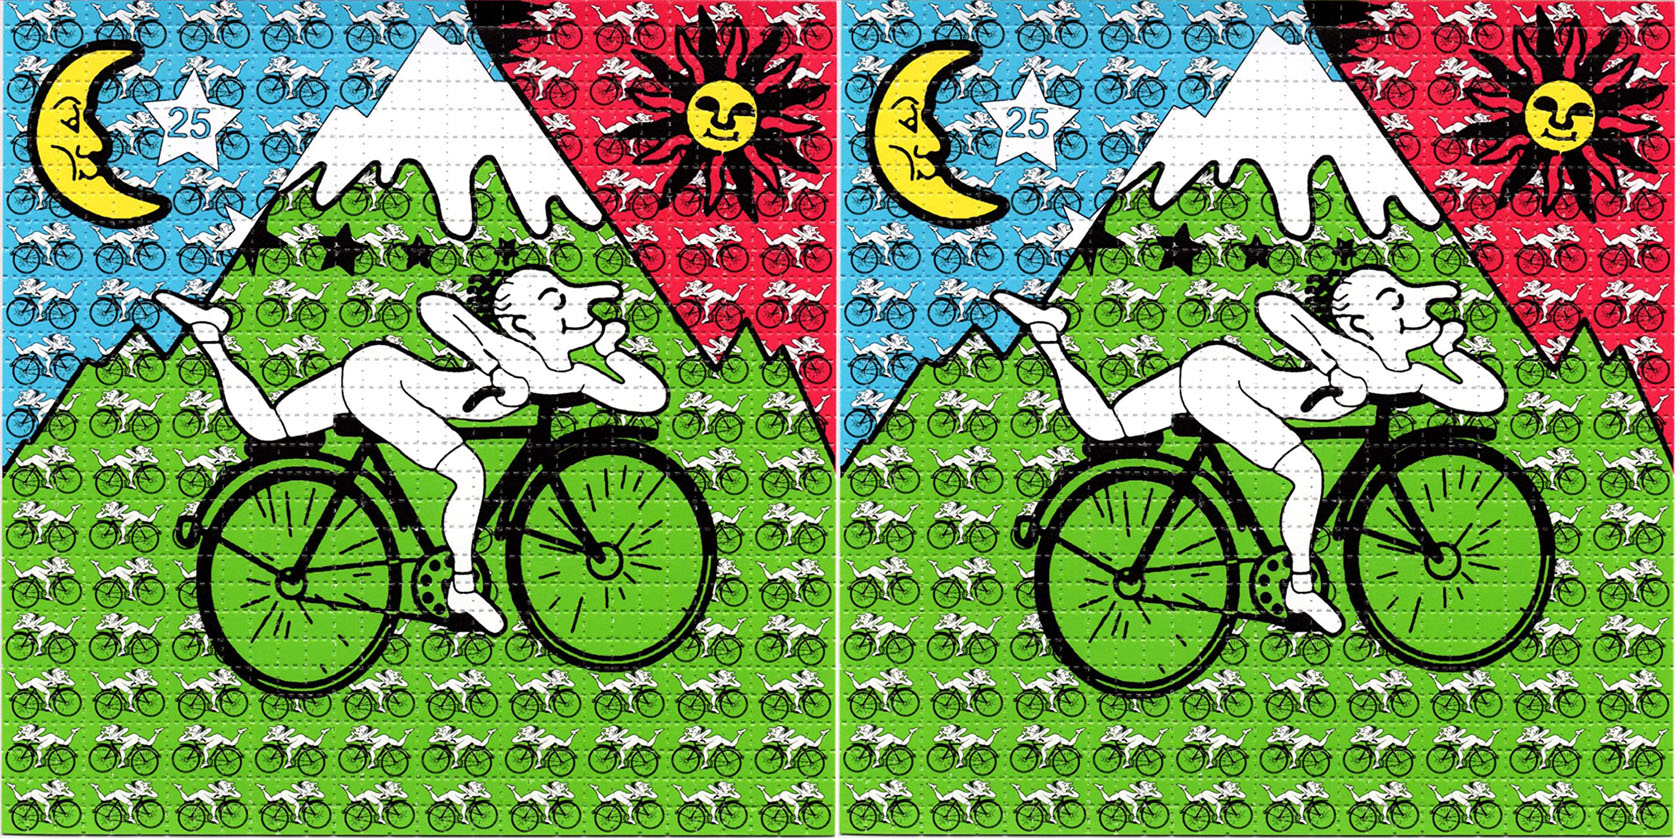 Image of blotter art depicting Albert Hoffman riding a bicycle